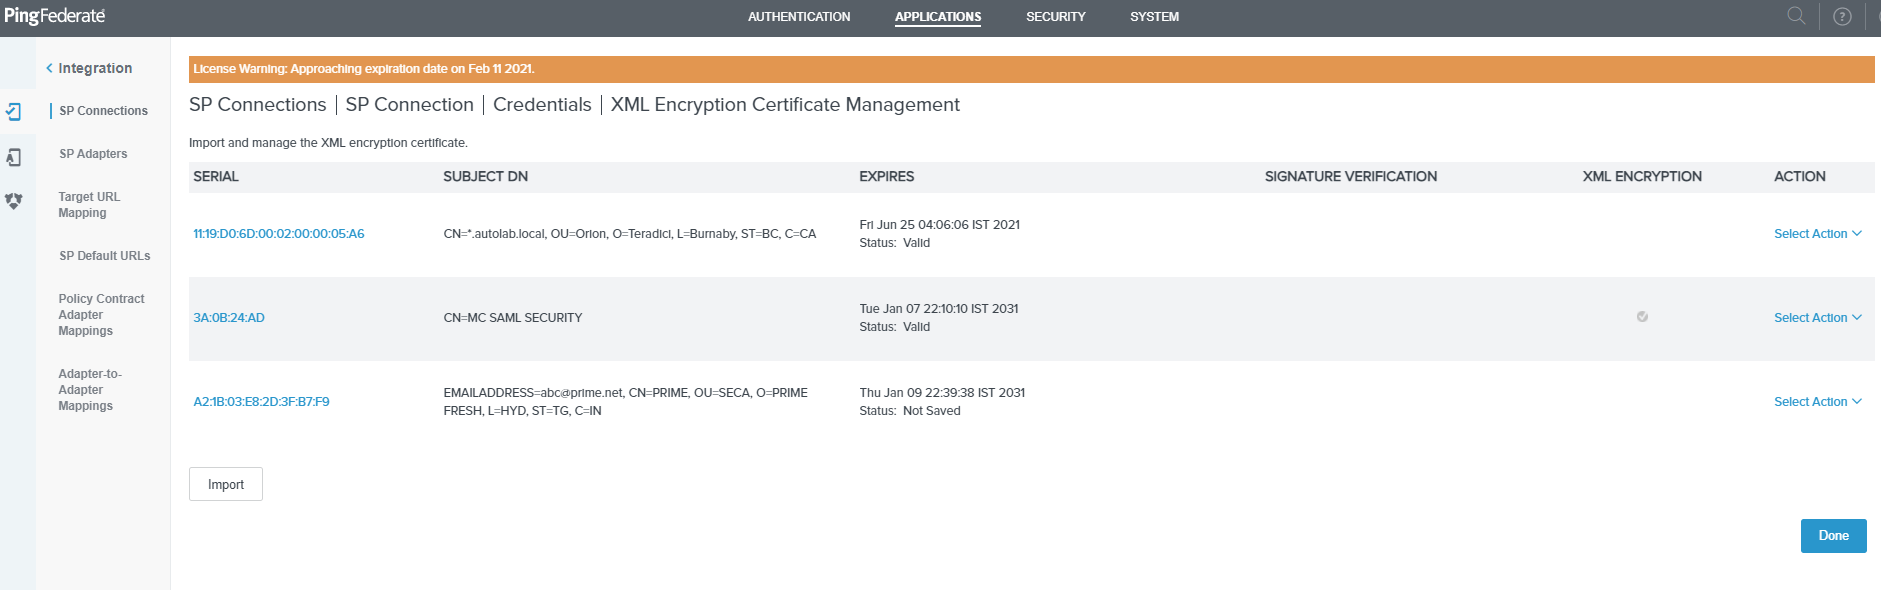 SP Connections Credentials XML Encryption Certificate Management 2